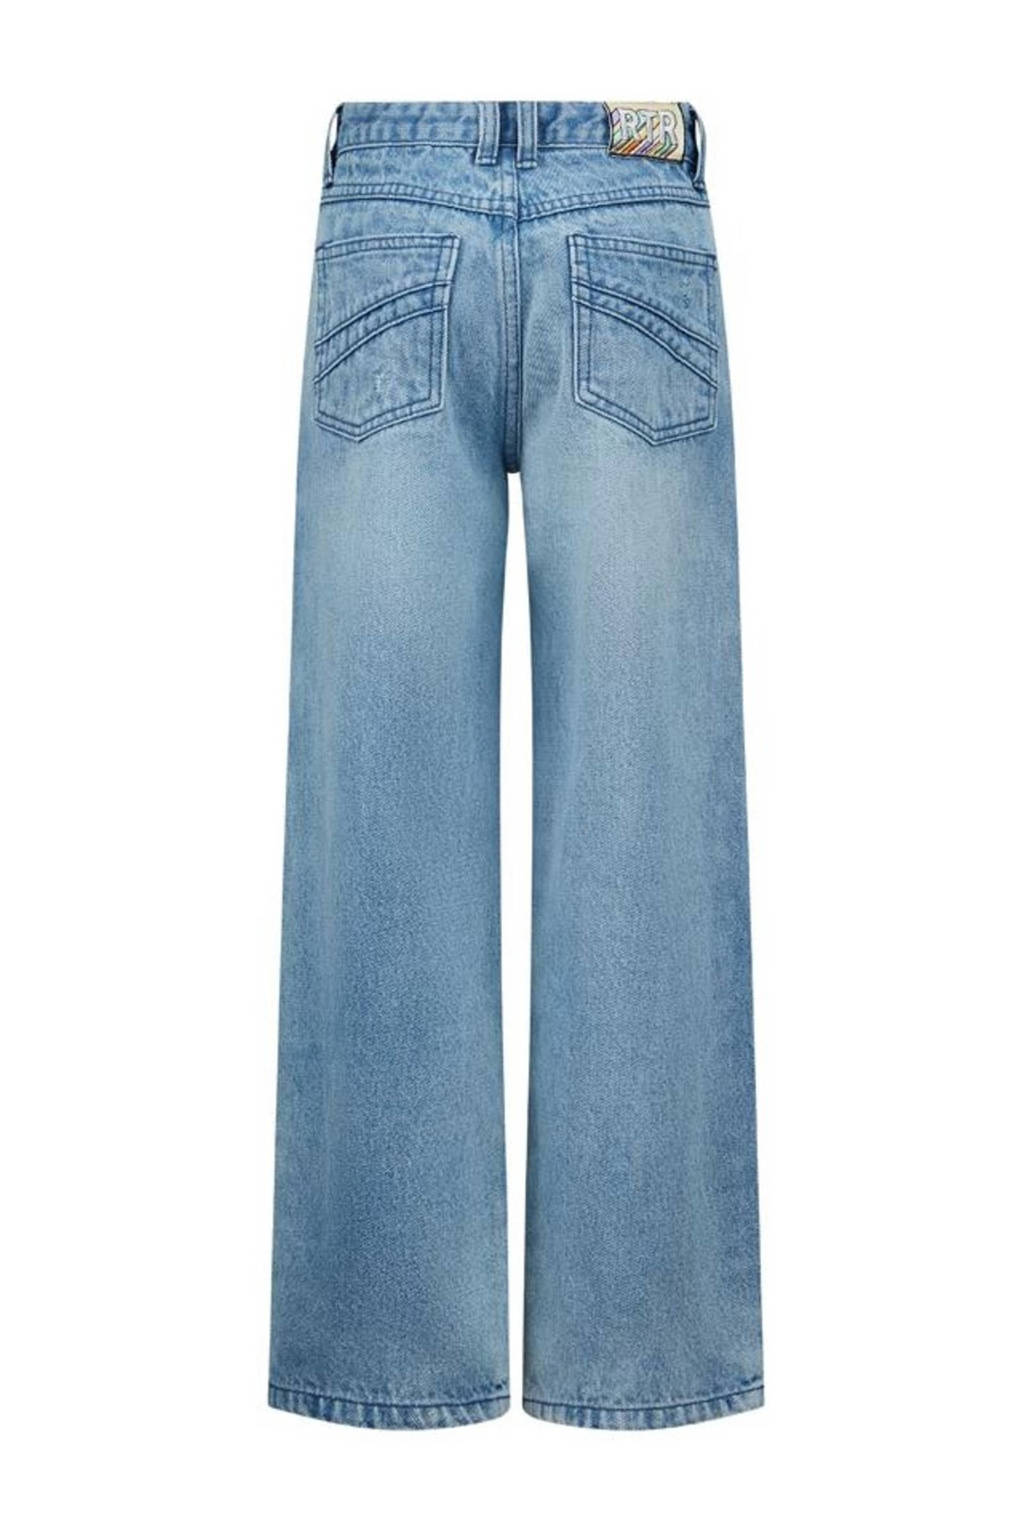 De Kamer Humoristisch sector Retour Denim loose fit jeans Celeste medium blue denim | wehkamp